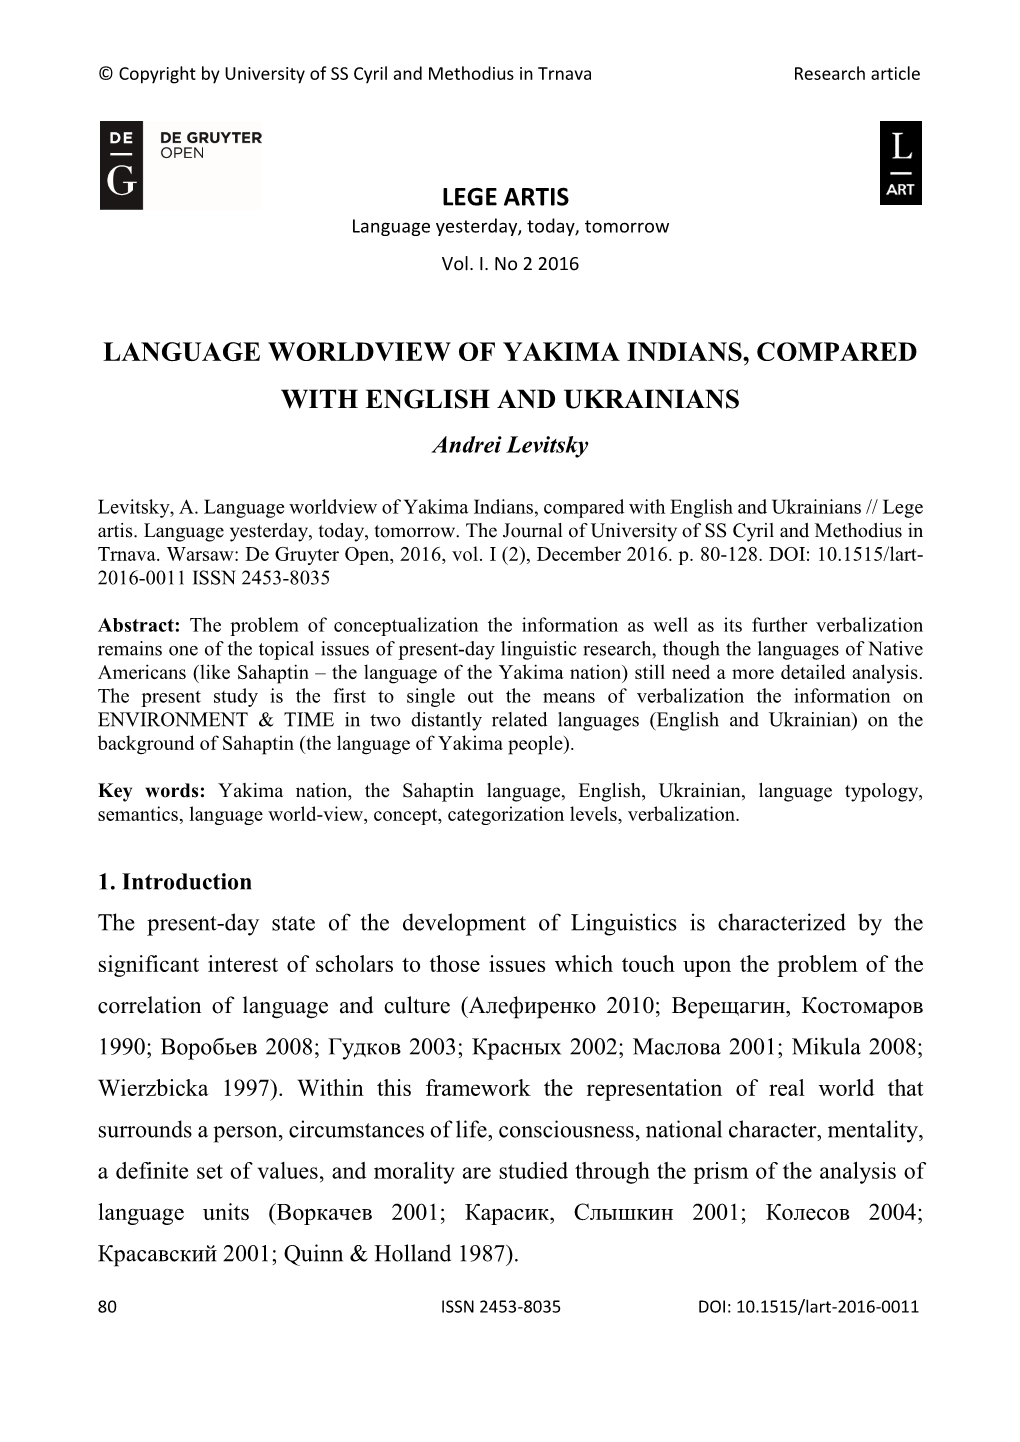 LANGUAGE WORLDVIEW of YAKIMA INDIANS, COMPARED with ENGLISH and UKRAINIANS Andrei Levitsky